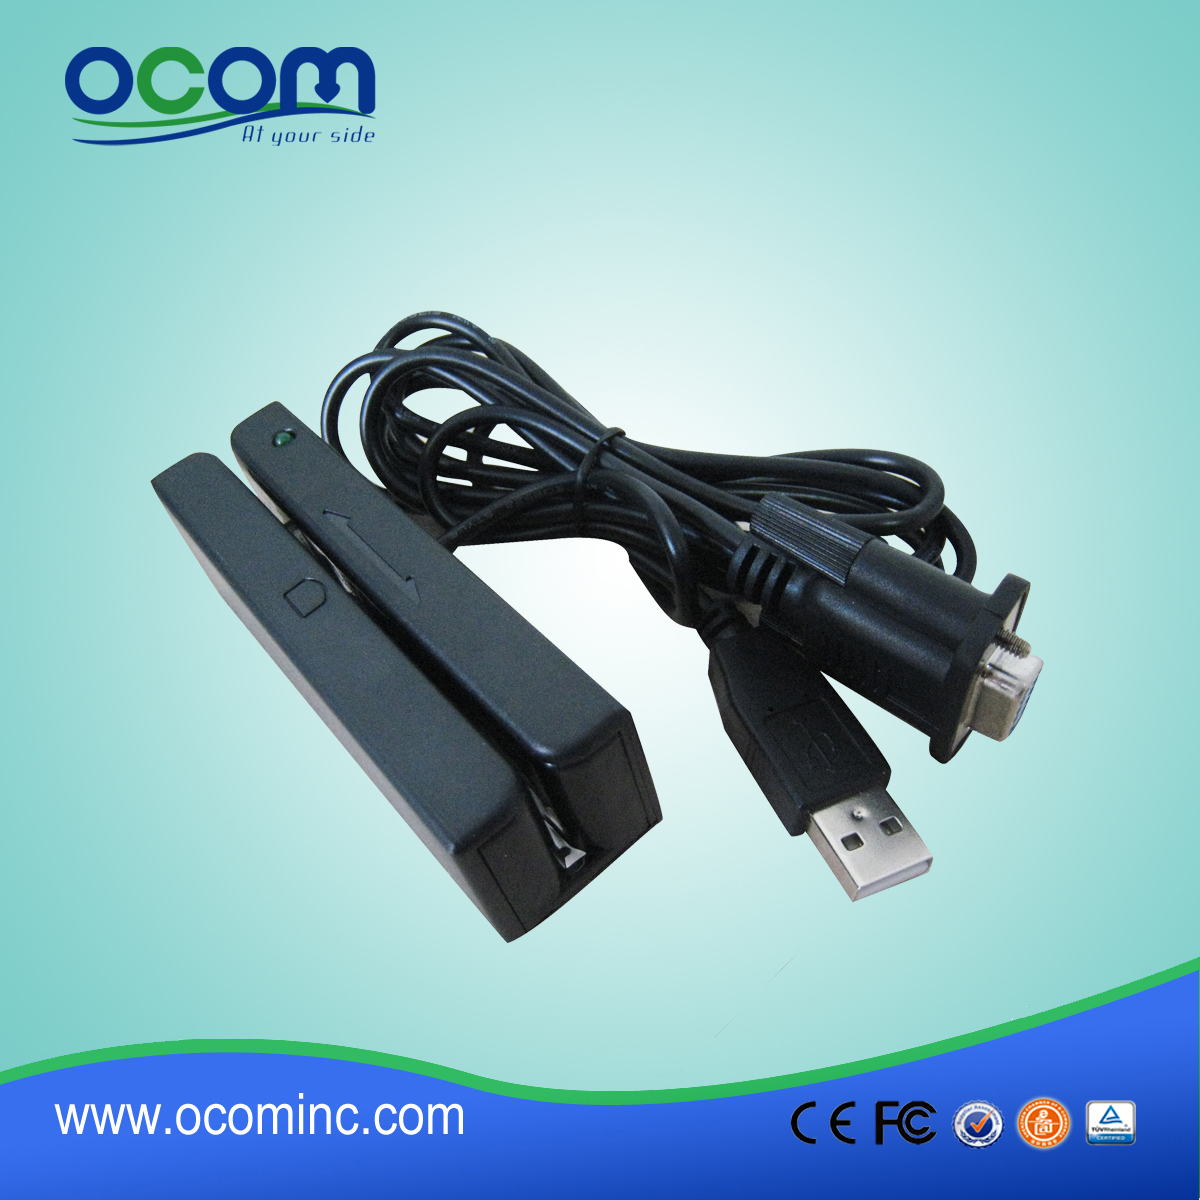 CR1300 Compact Magnetic Stripe Card Reader USB Serial PS2 TTL UART Option